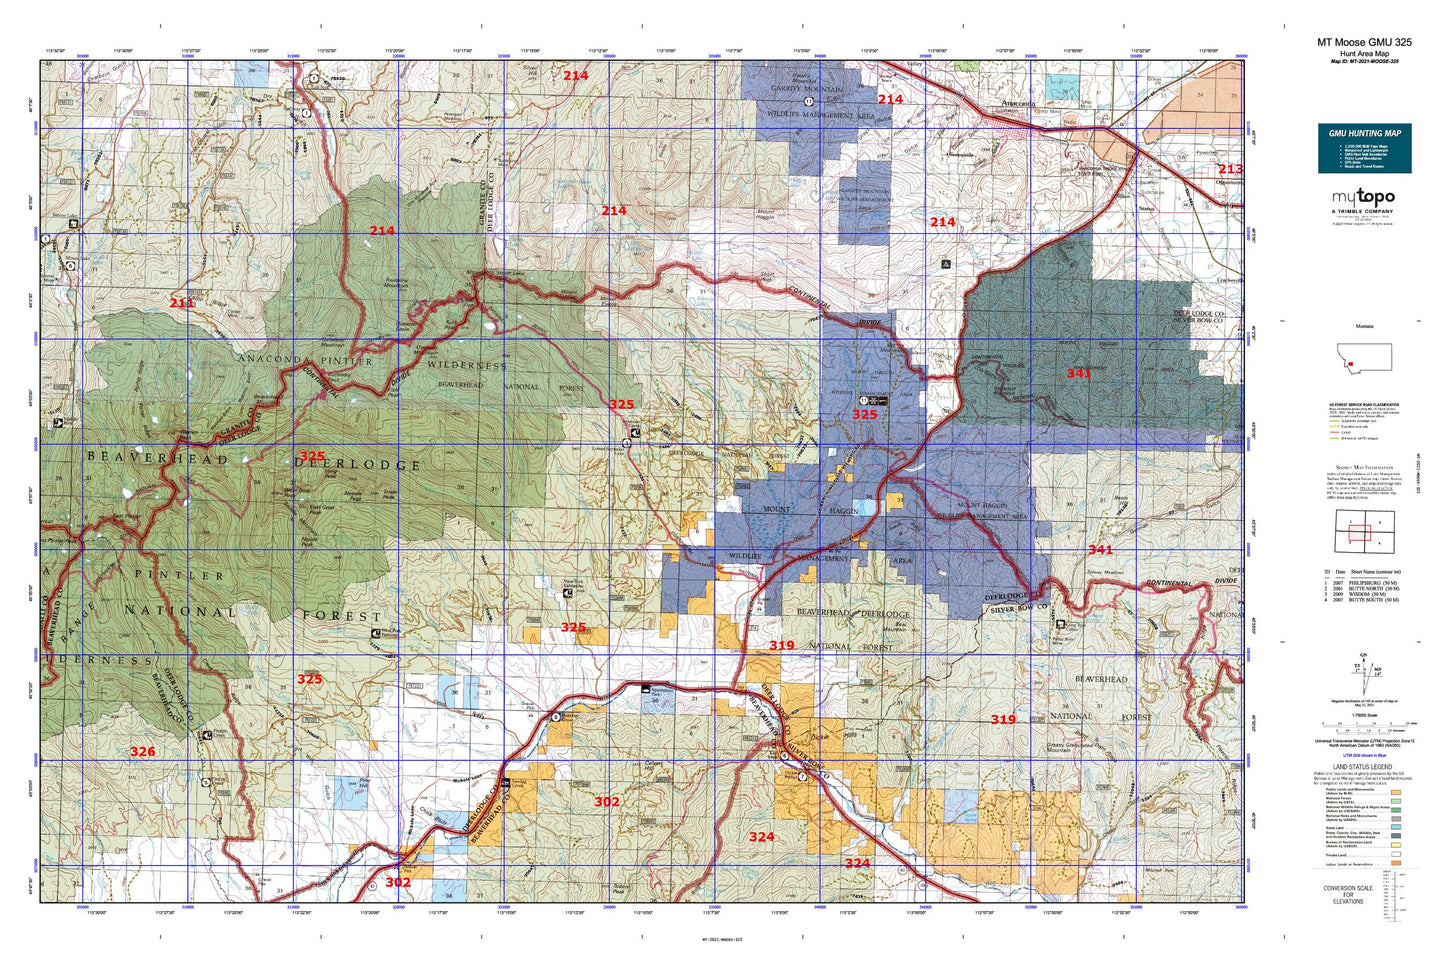 Montana Moose GMU 325 Map Image